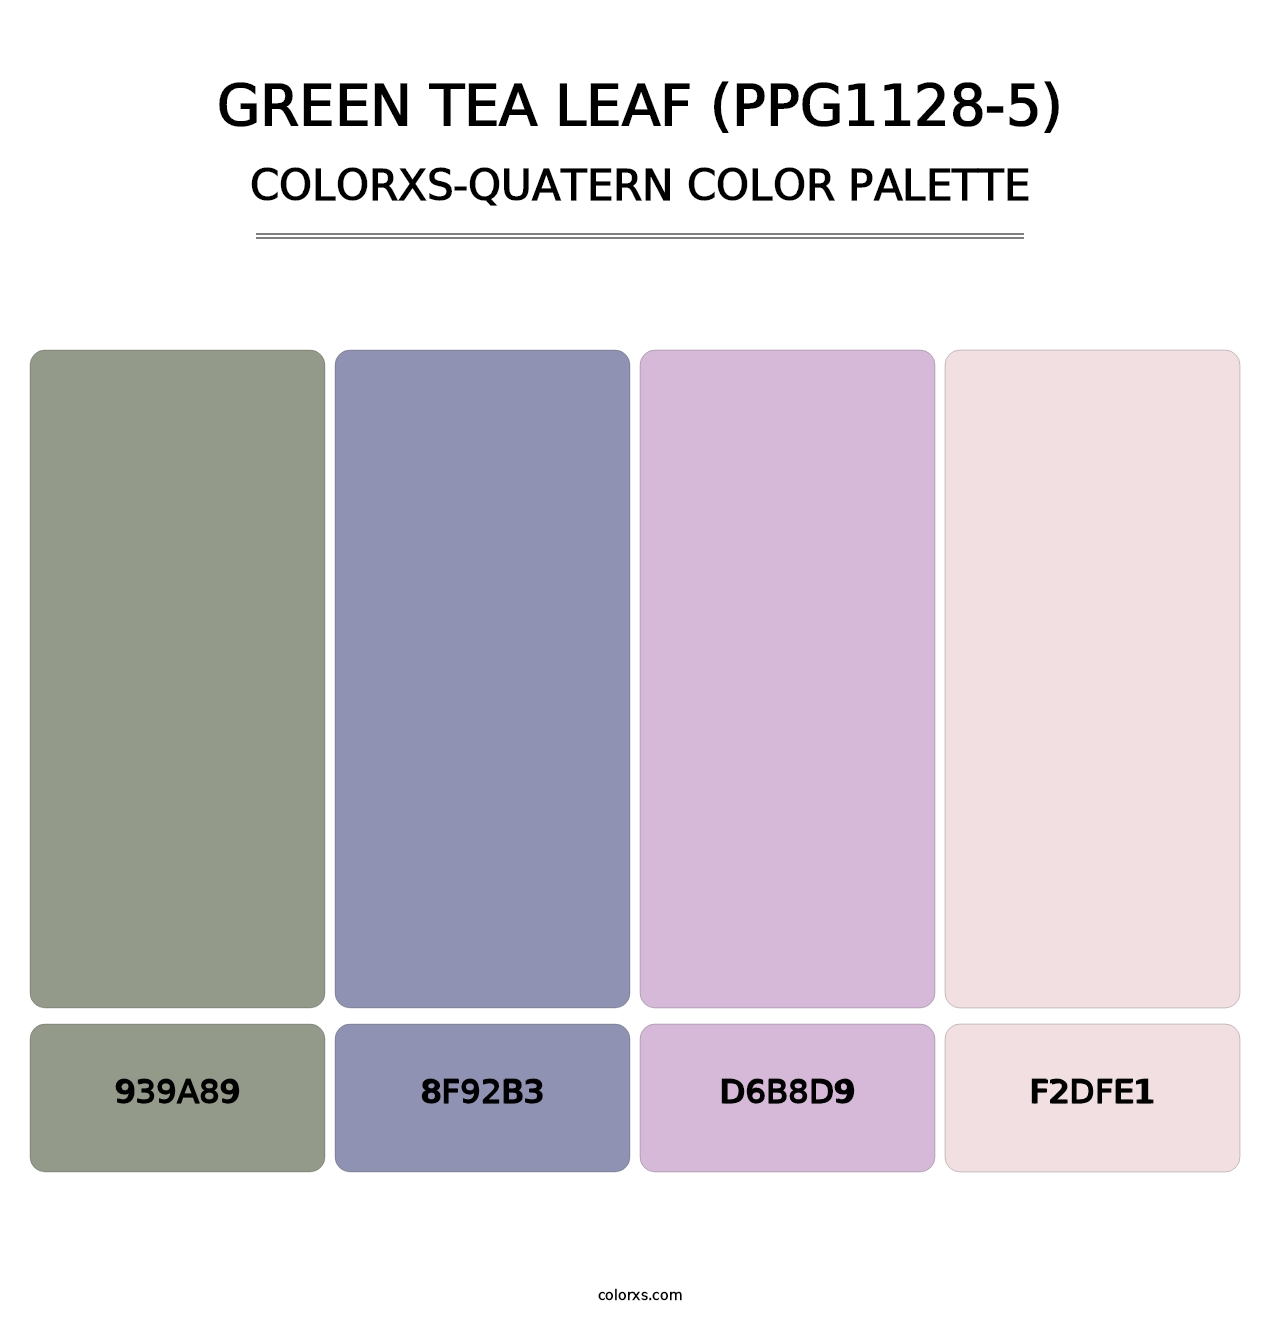 Green Tea Leaf (PPG1128-5) - Colorxs Quatern Palette